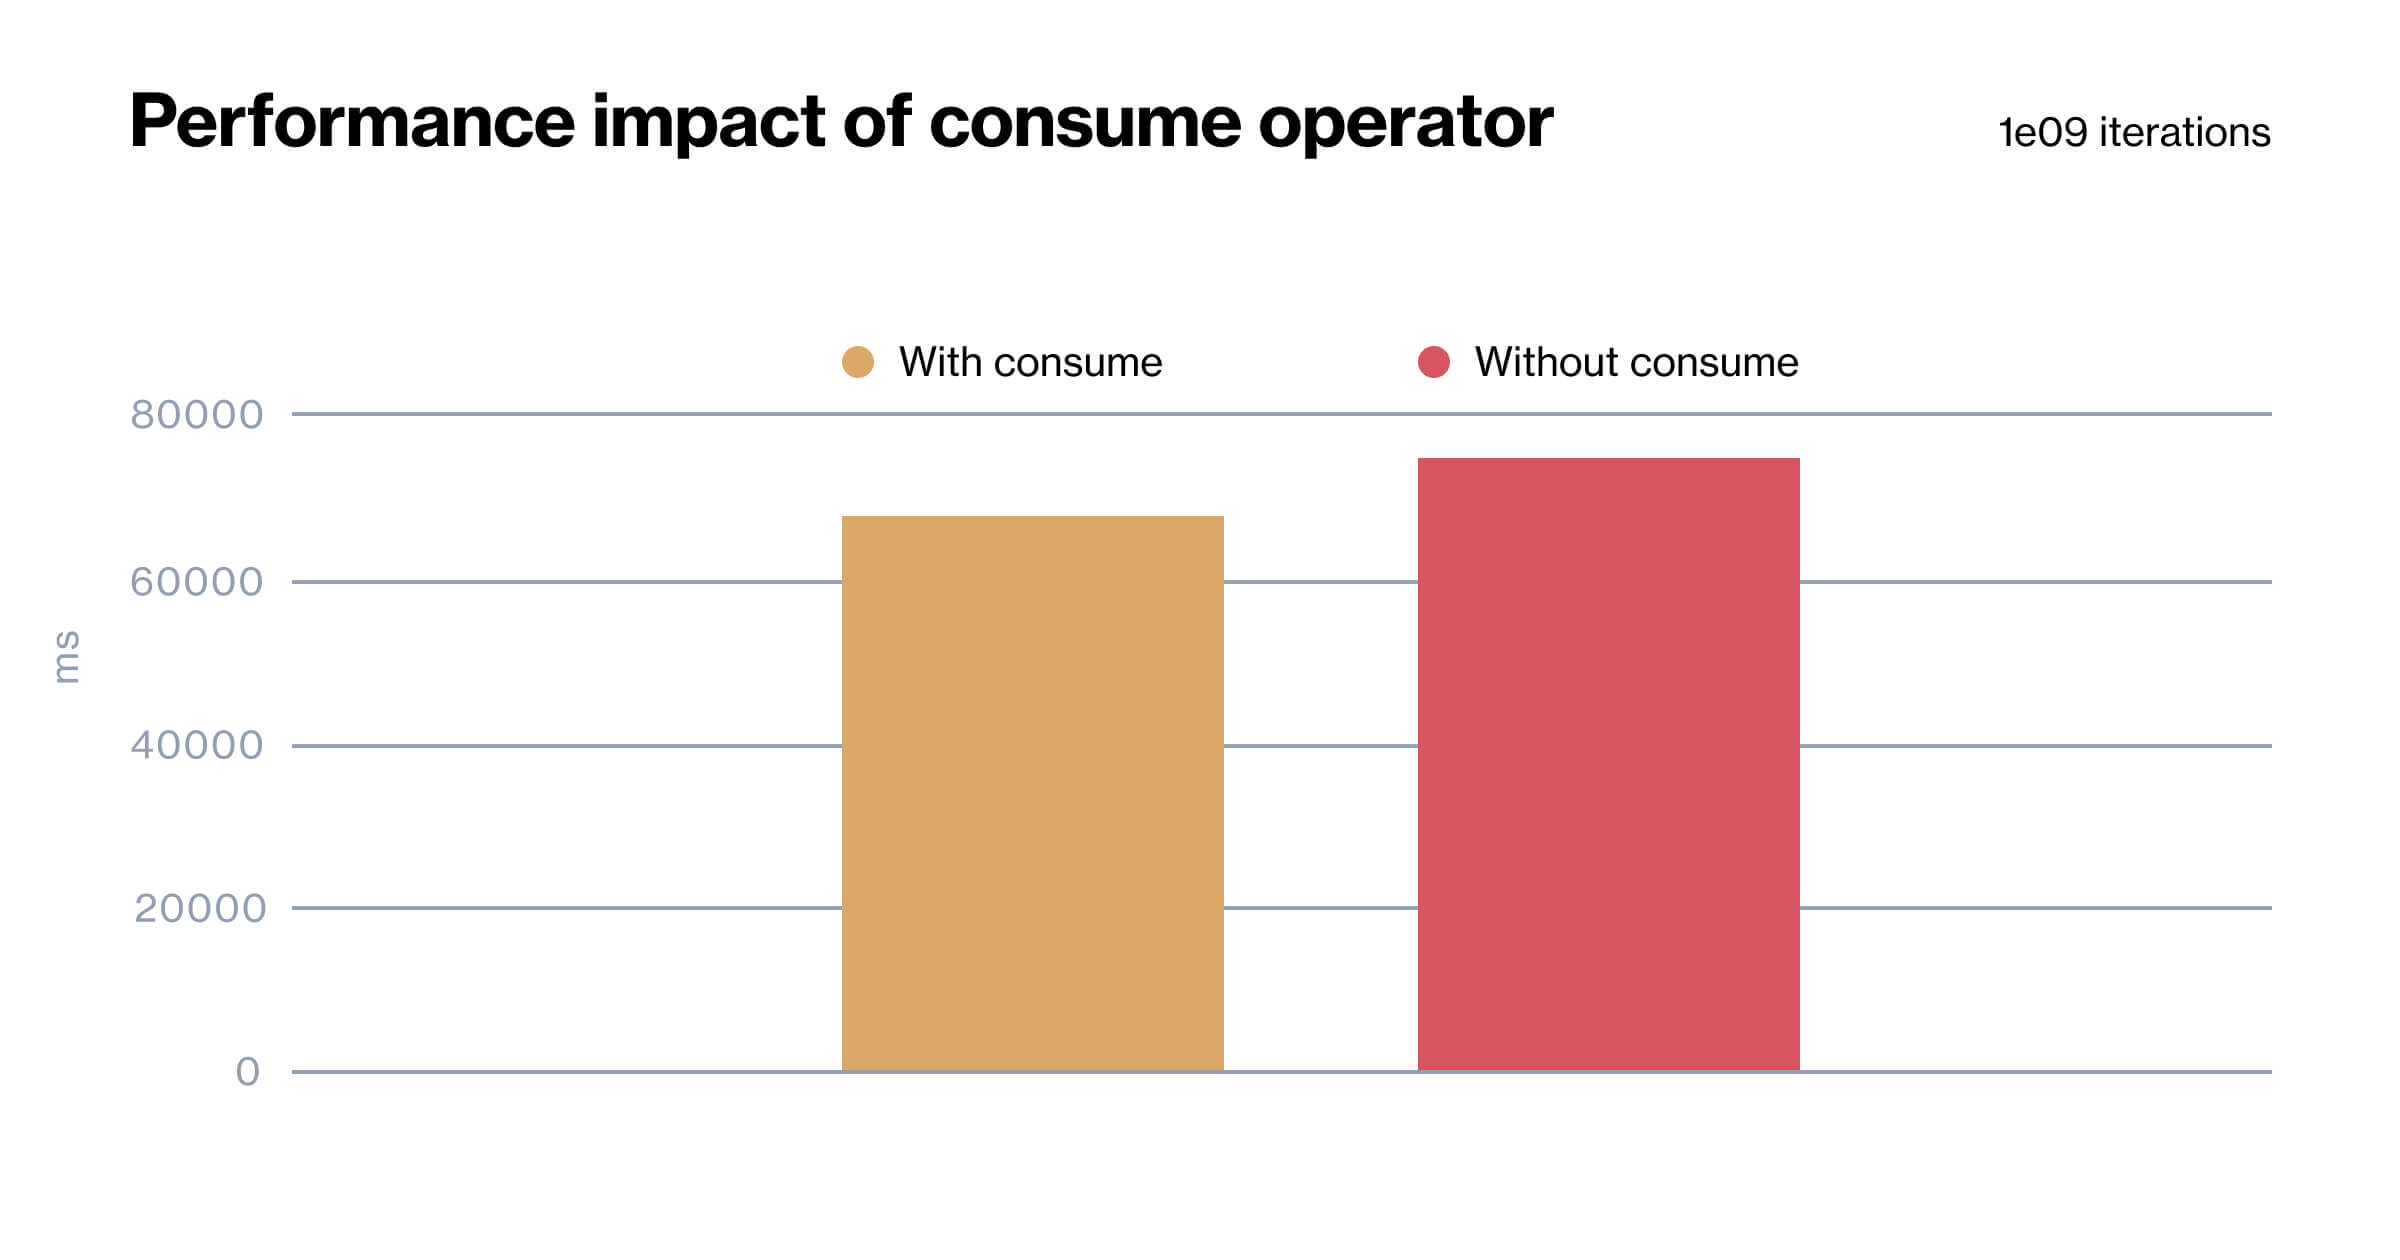 Performance impact of consumer operator: Analyzing the efficiency of the consumer operator in a concise visual representation.